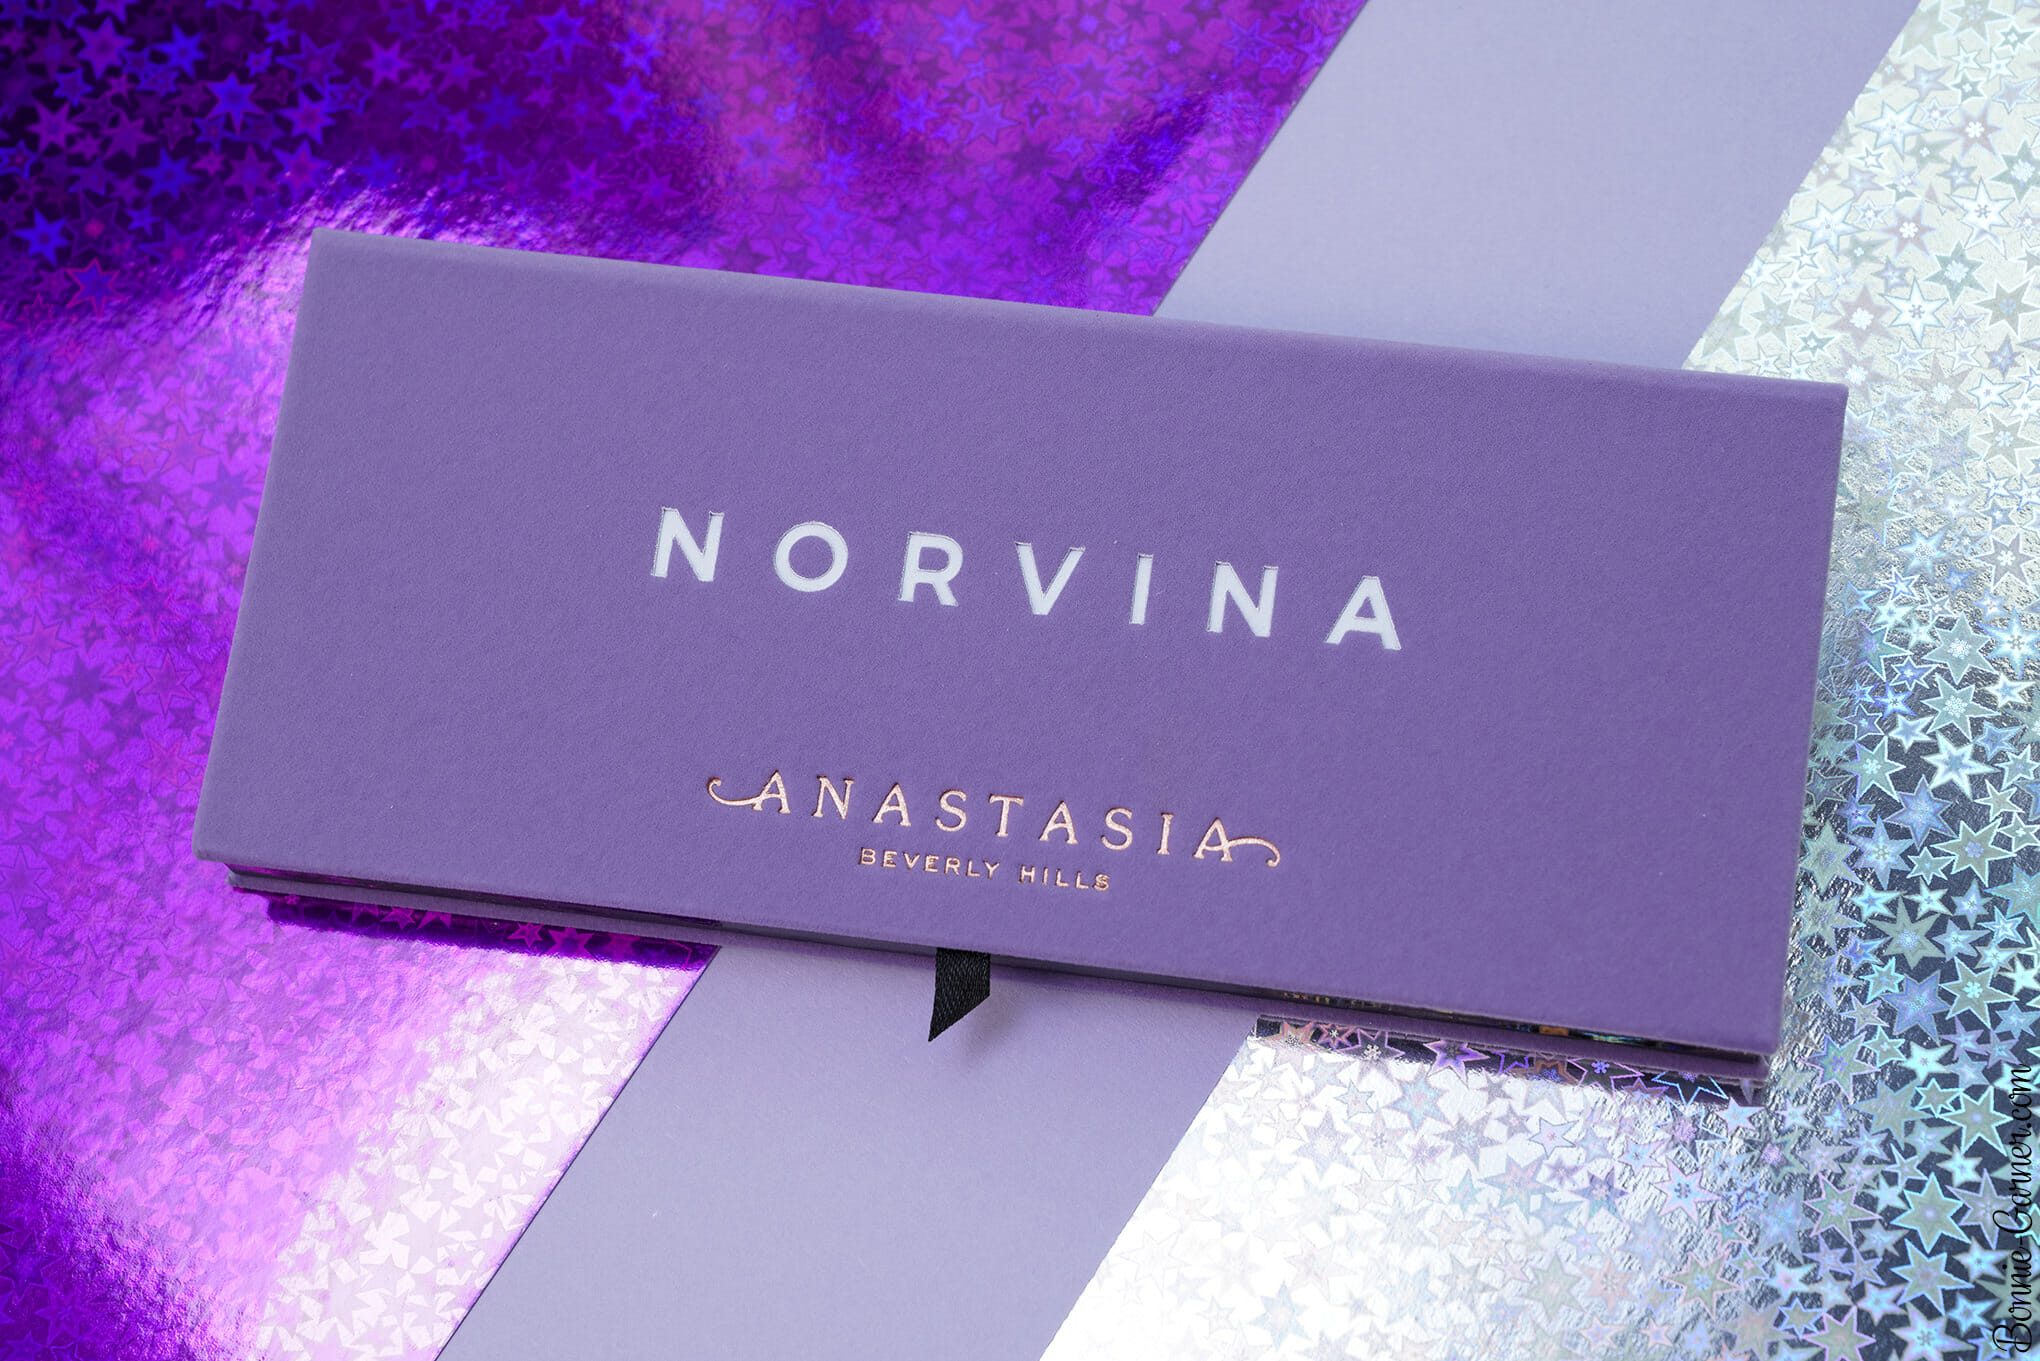 Anastasia Beverly Hills Norvina palette